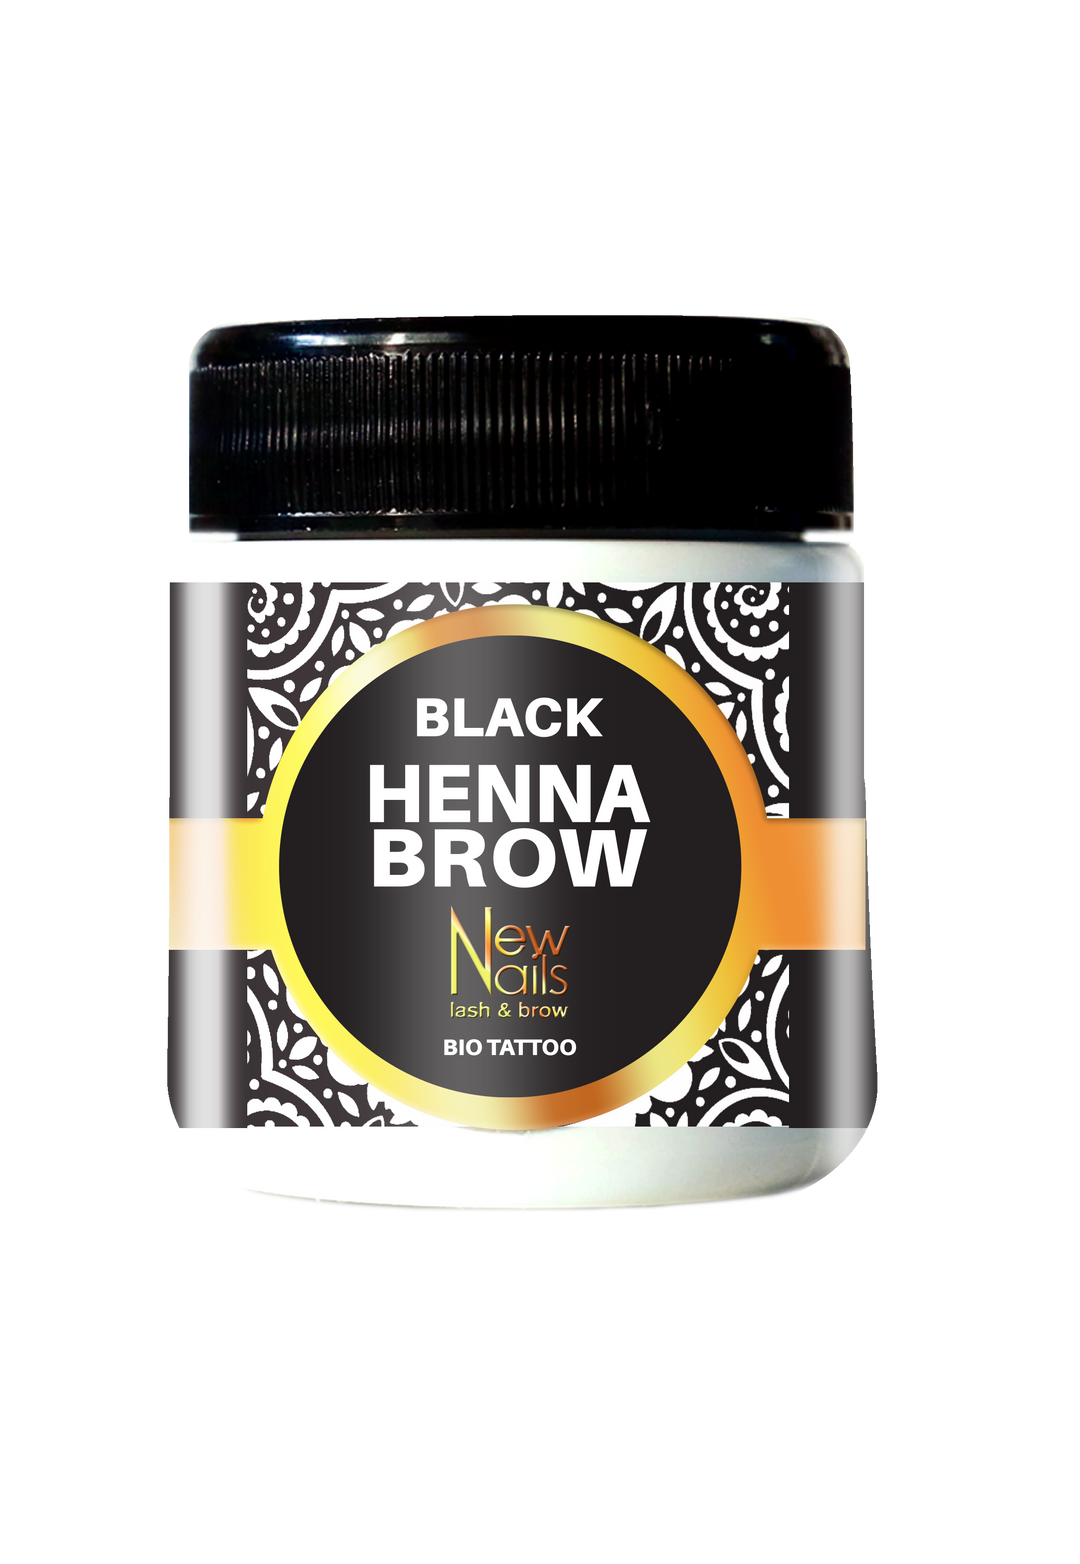 HENNA BROW - Black - black